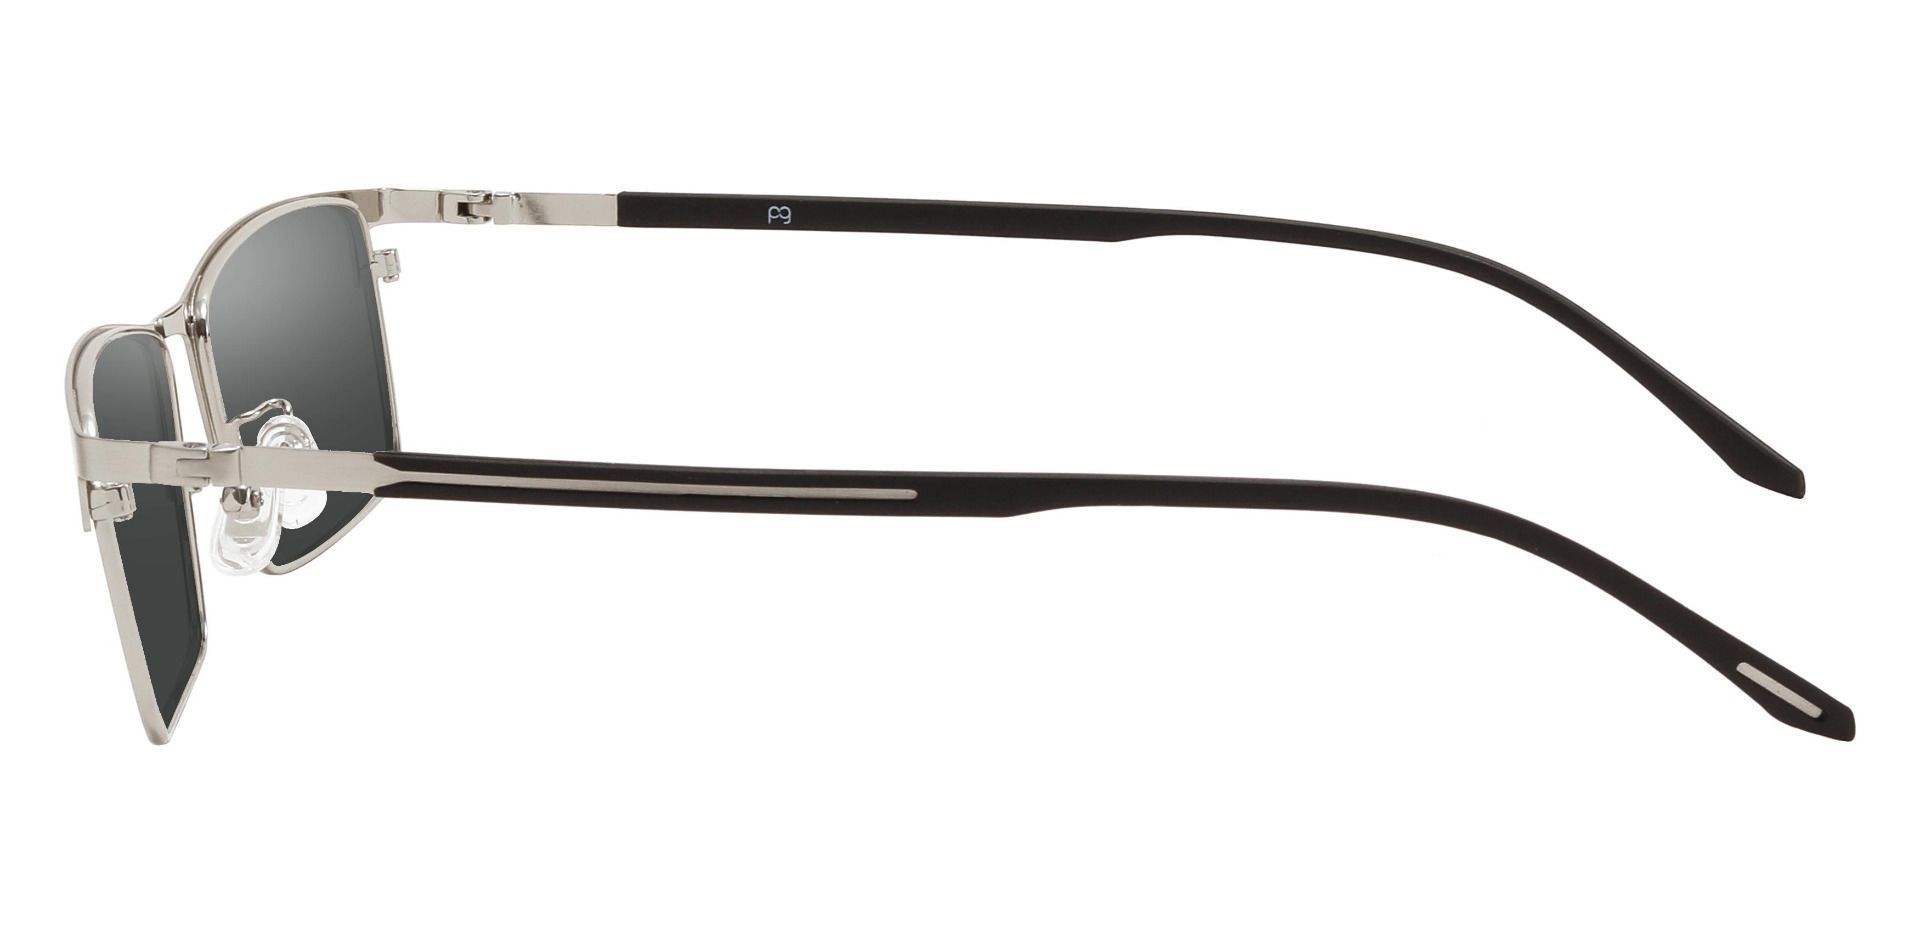 Regis Rectangle Progressive Sunglasses - Silver Frame With Gray Lenses